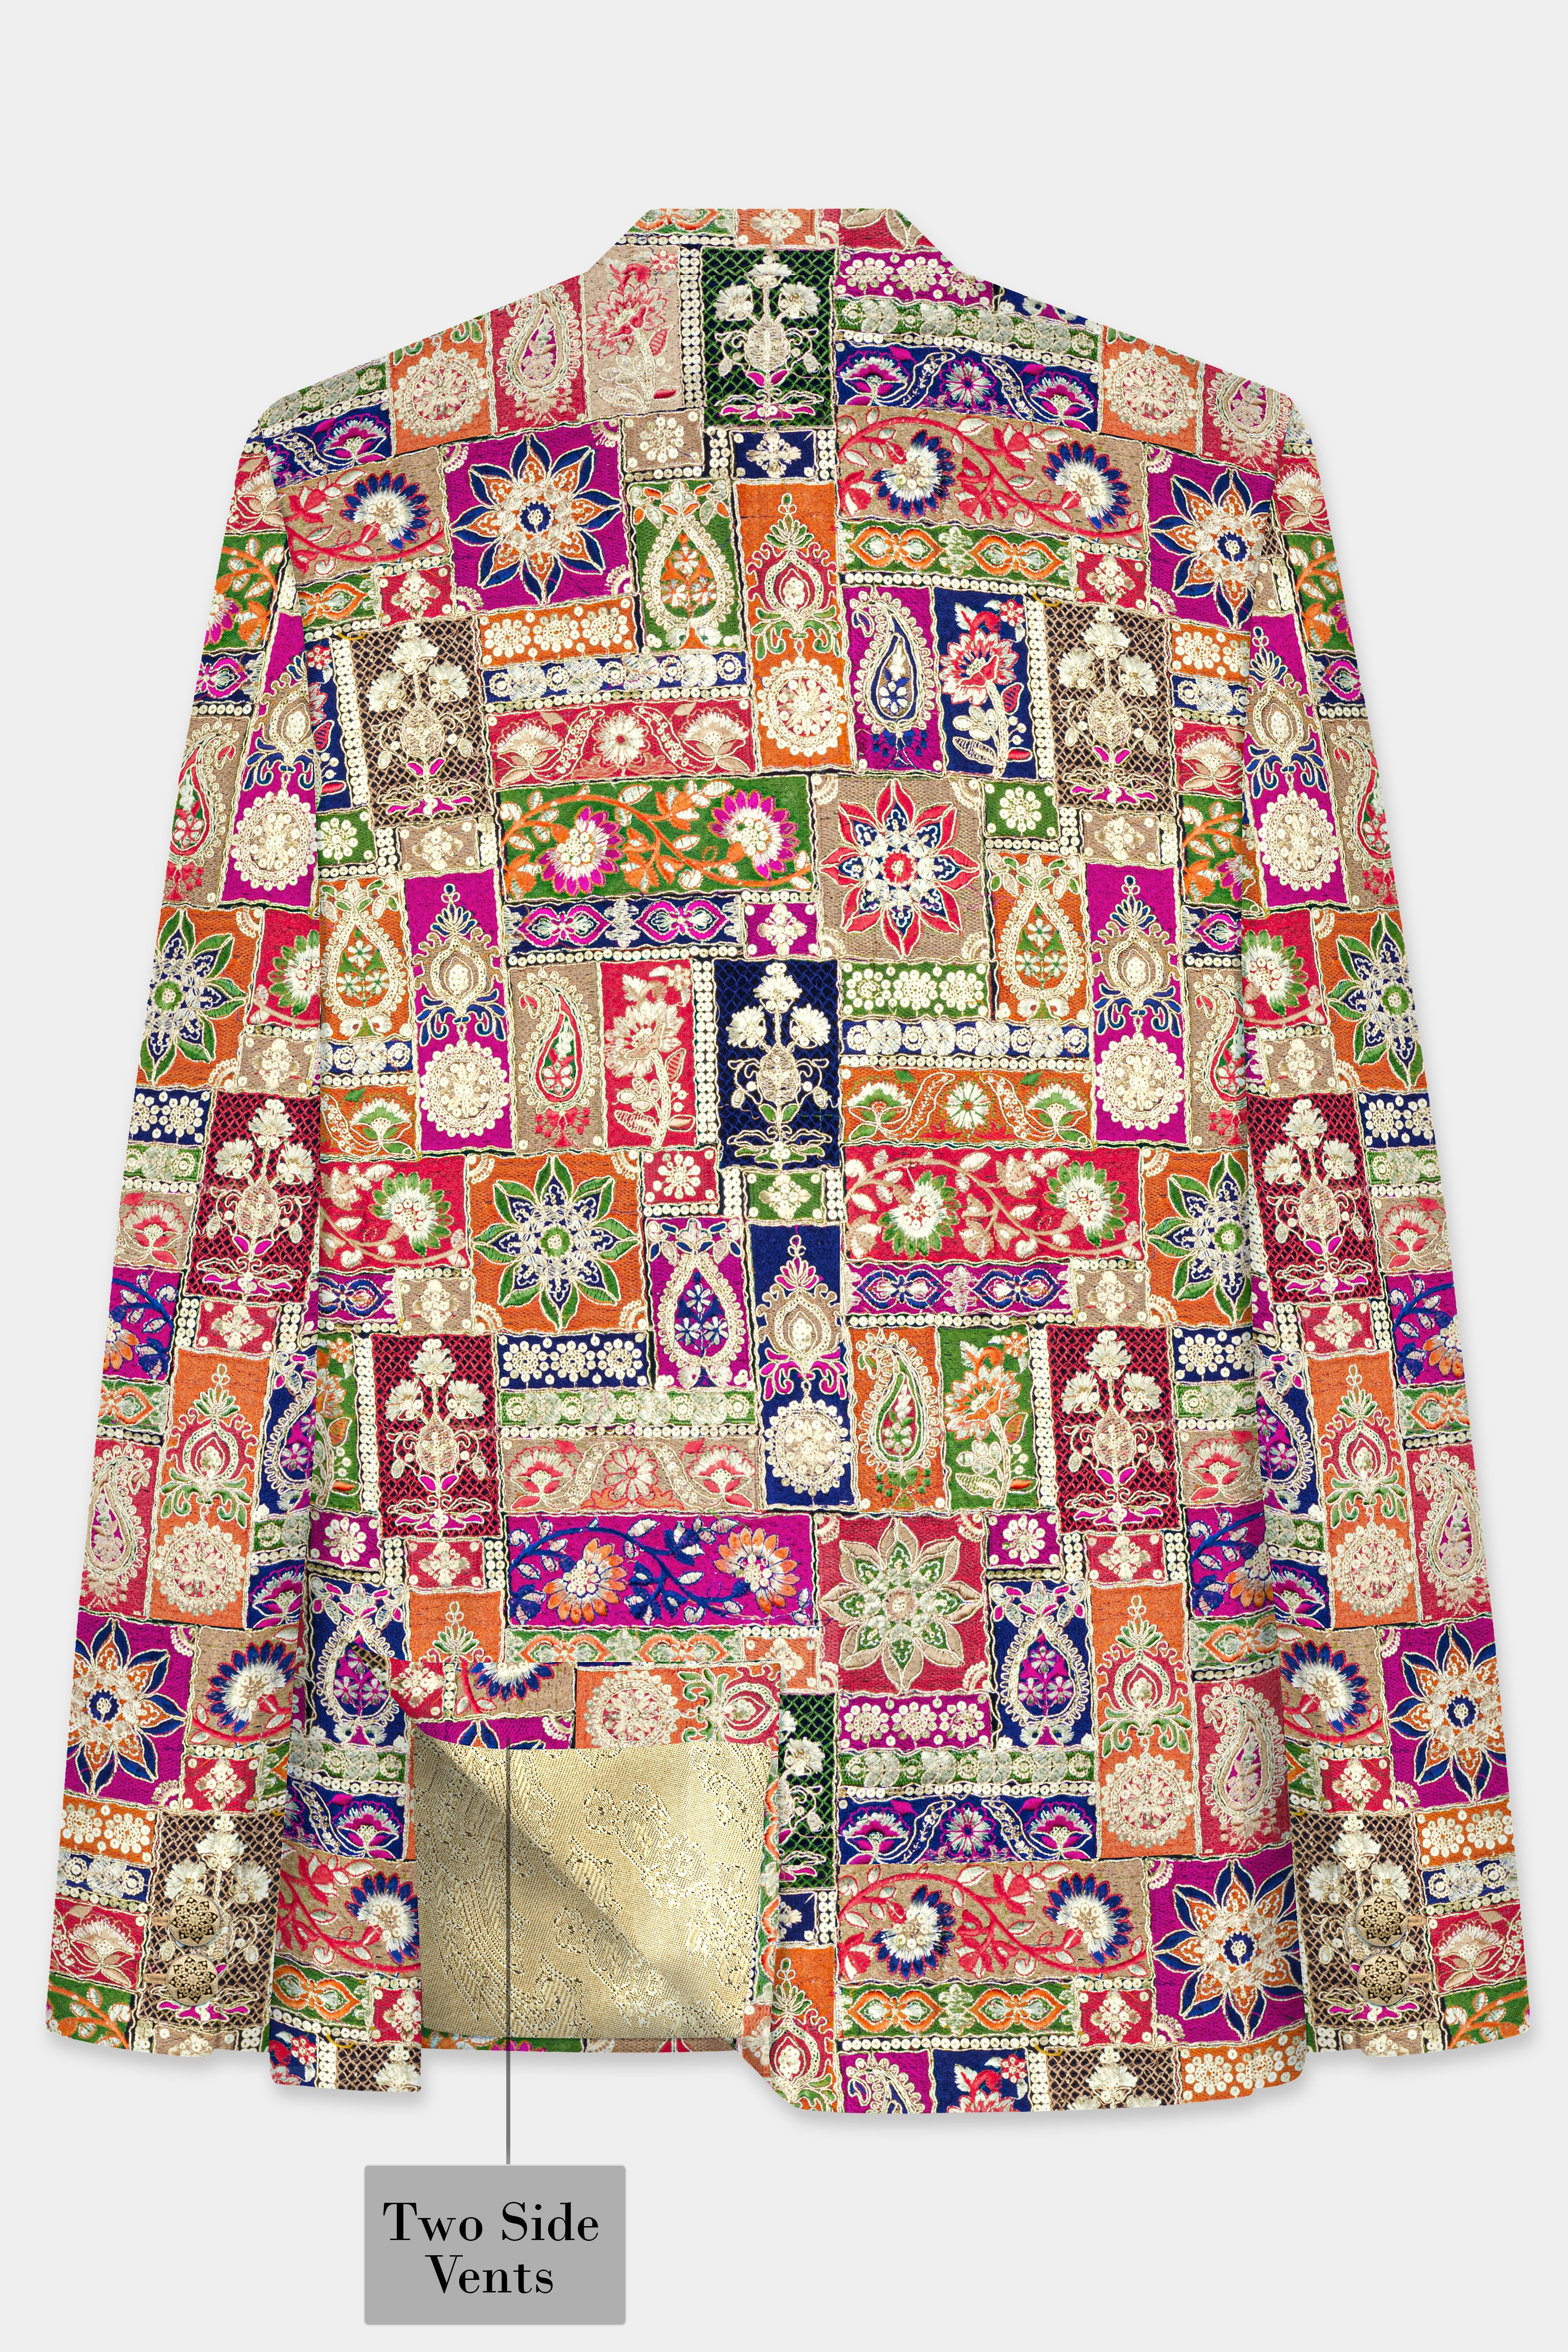 Multicolor Sequin and Heavy Embroidered Thread Work Cross Placket Bandhgala Jodhpuri